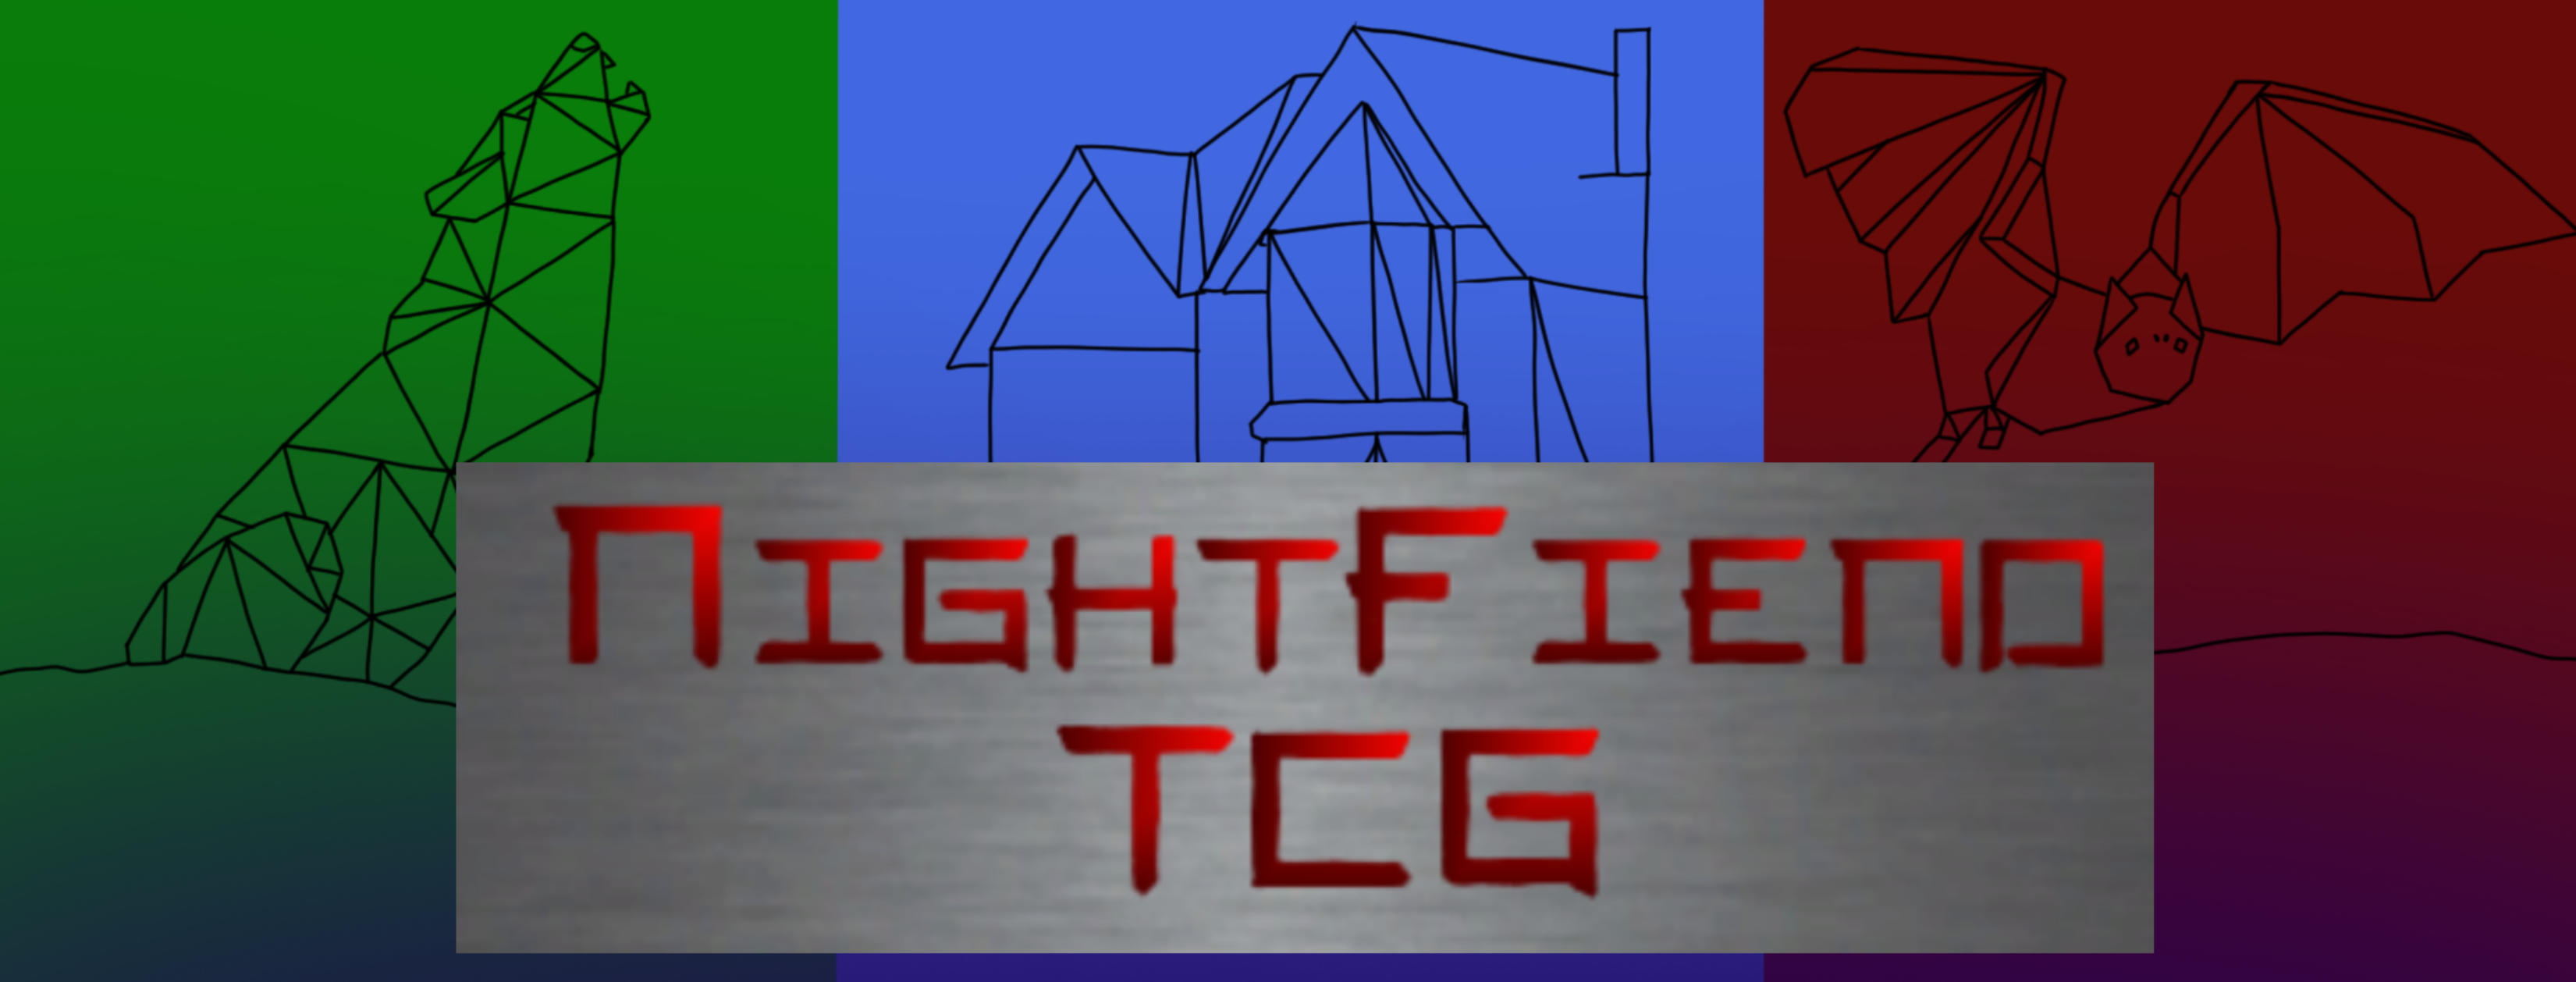 NightFiend TCG